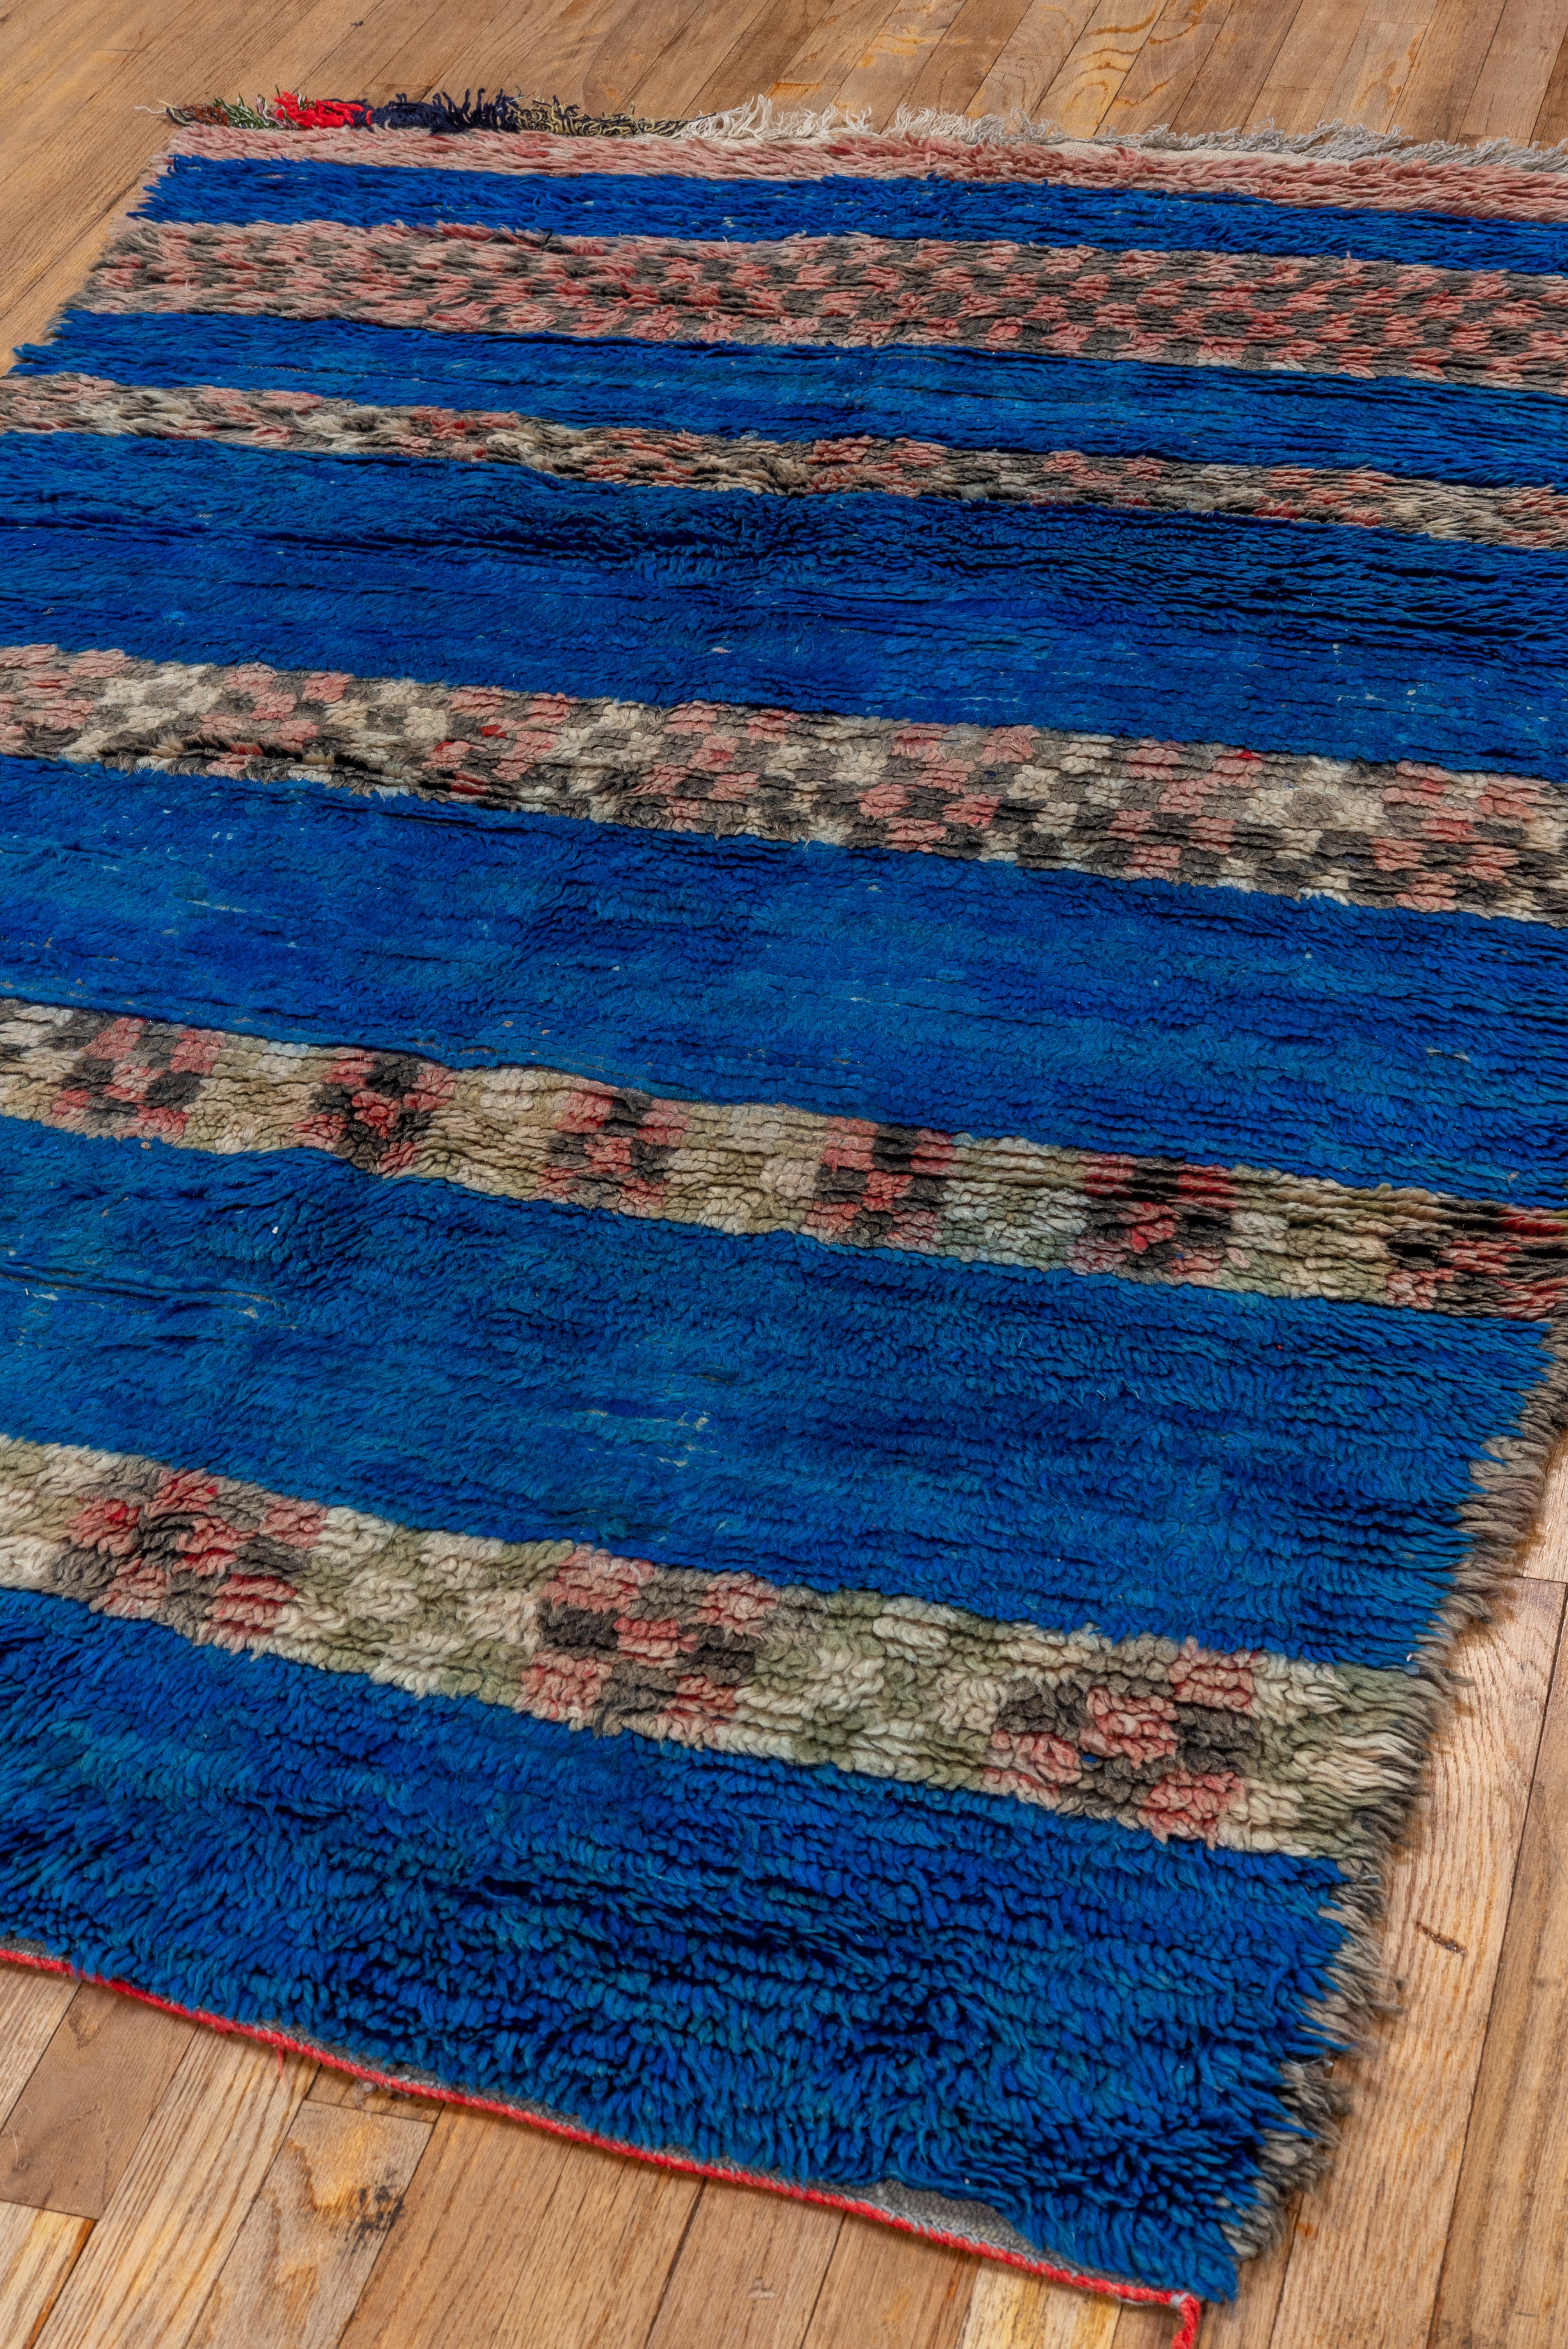 Moroccan village rug in blue red black